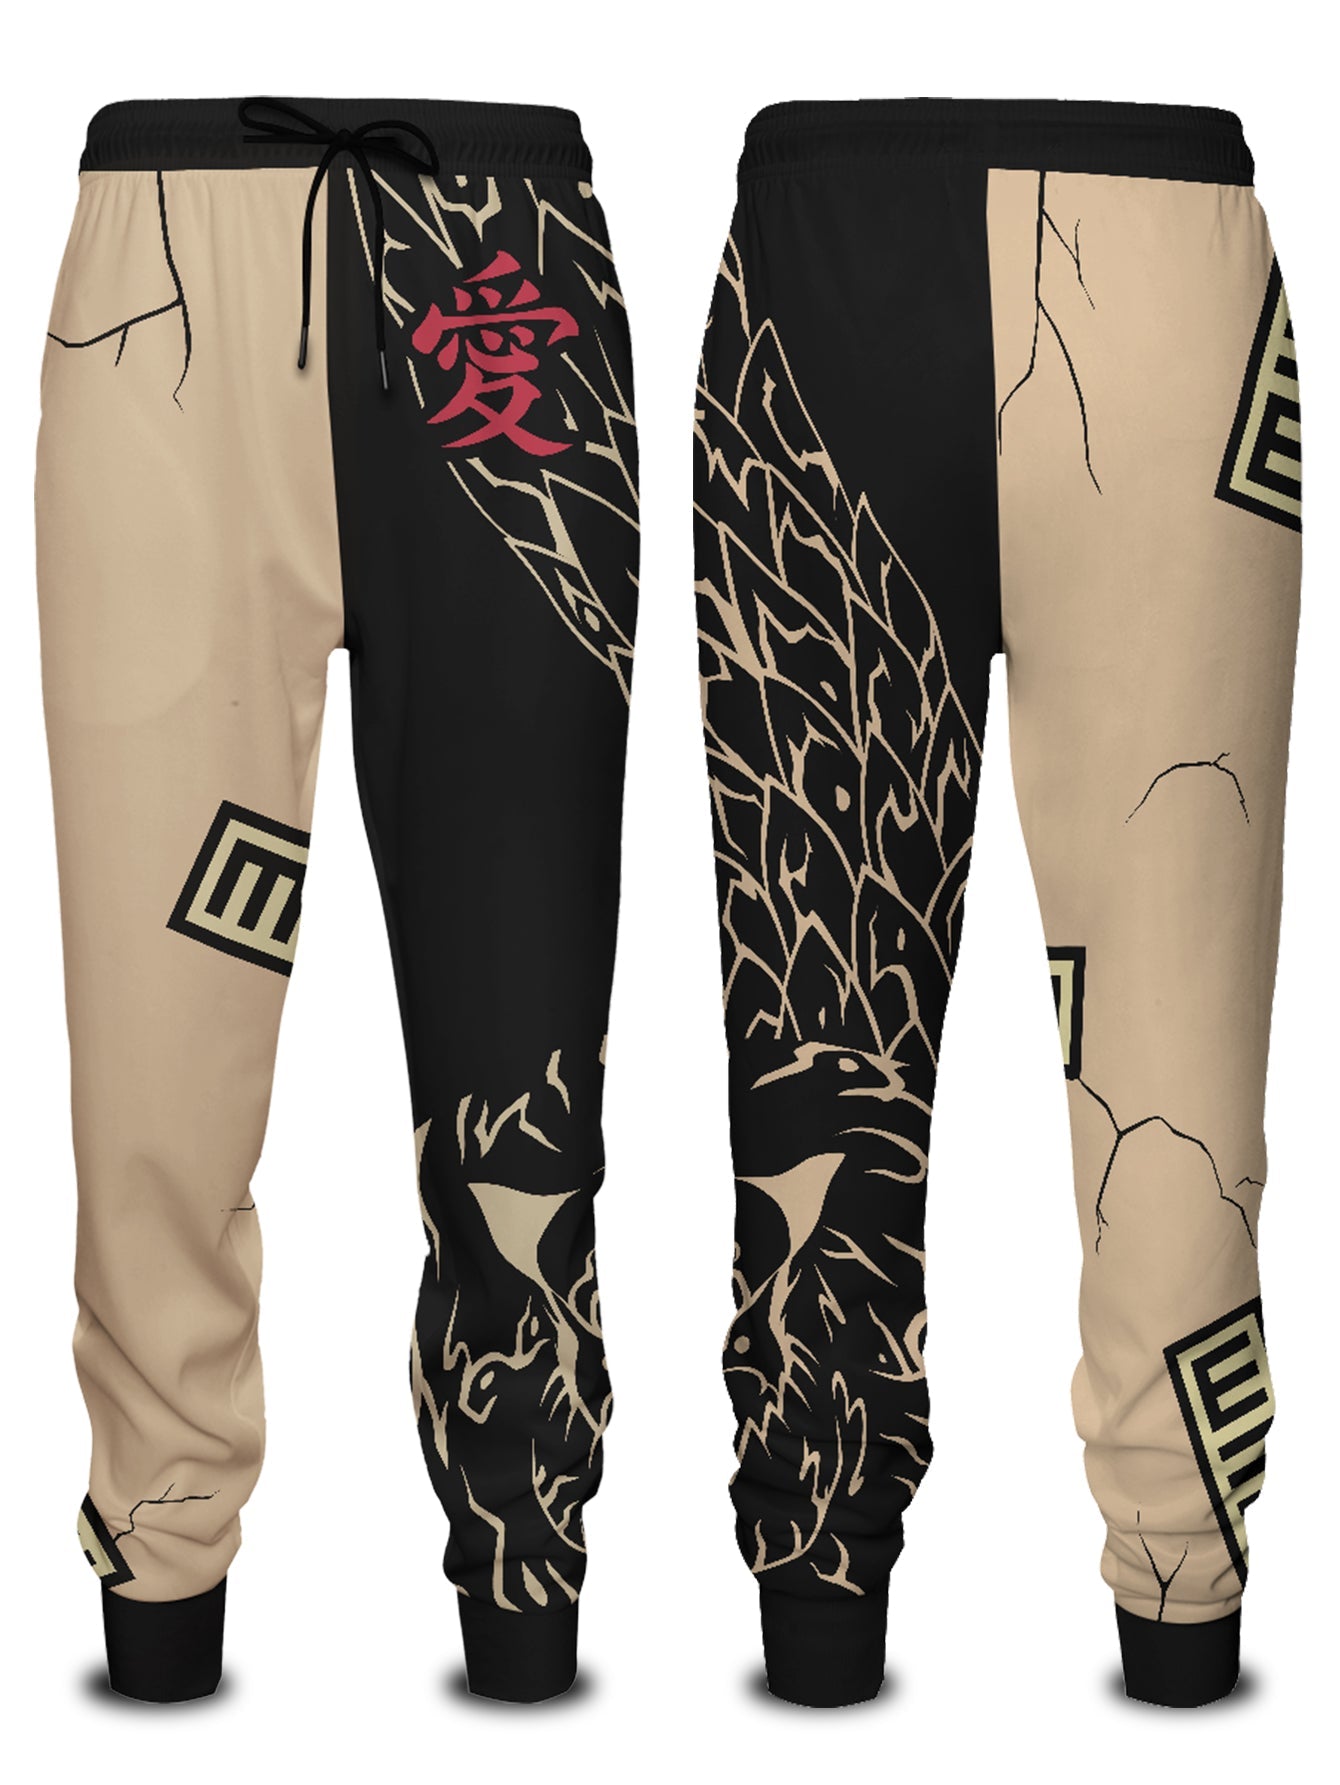 Gaara Naruto Shippuden Streetwear Sweatpants